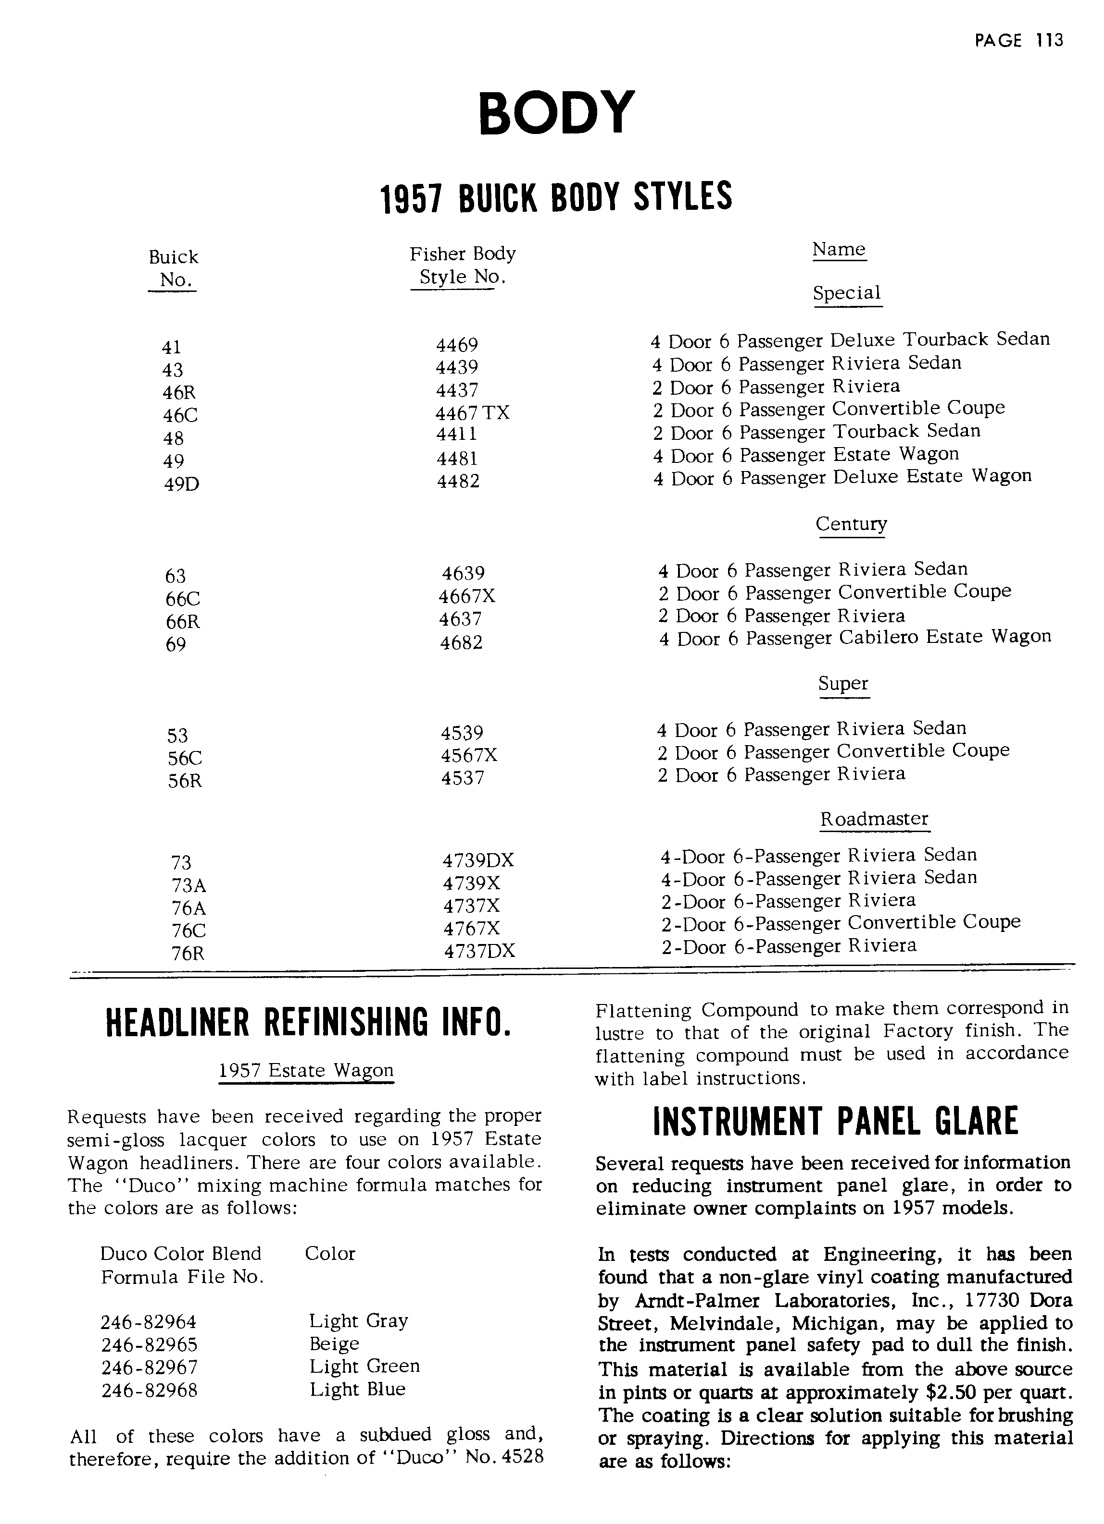 n_1957 Buick Product Service  Bulletins-114-114.jpg